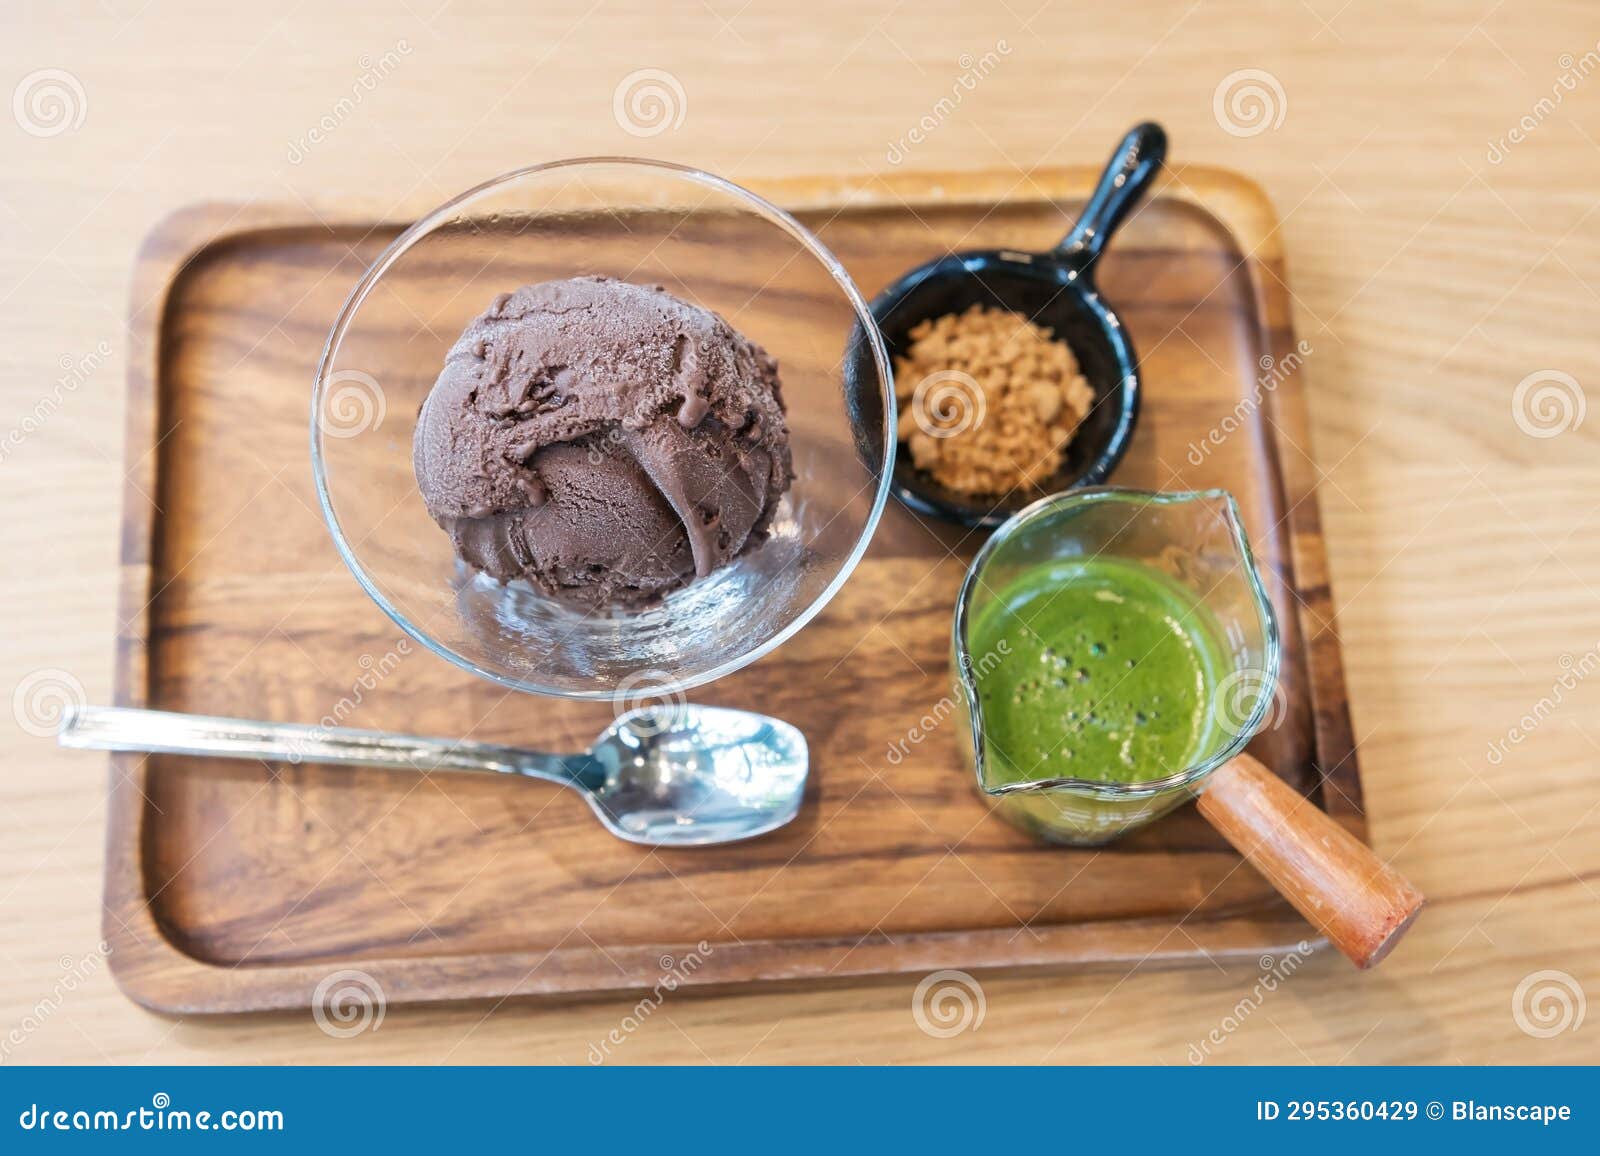 affogato chocolate ice cream with green tea hot fudge